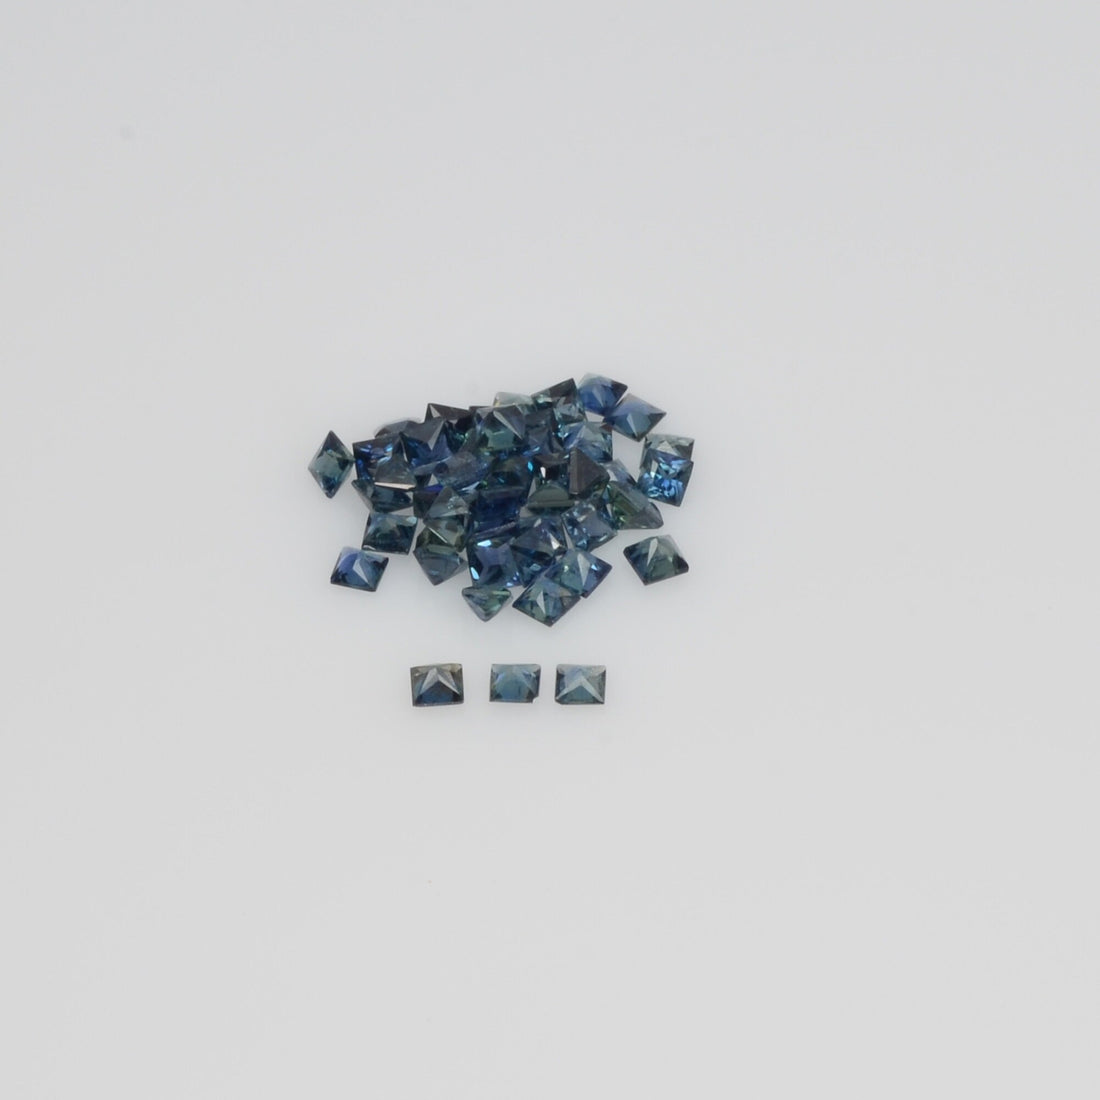 1.4-2.8 MM Natural Princess Cut Teal Blue Green Sapphire Loose Gemstone